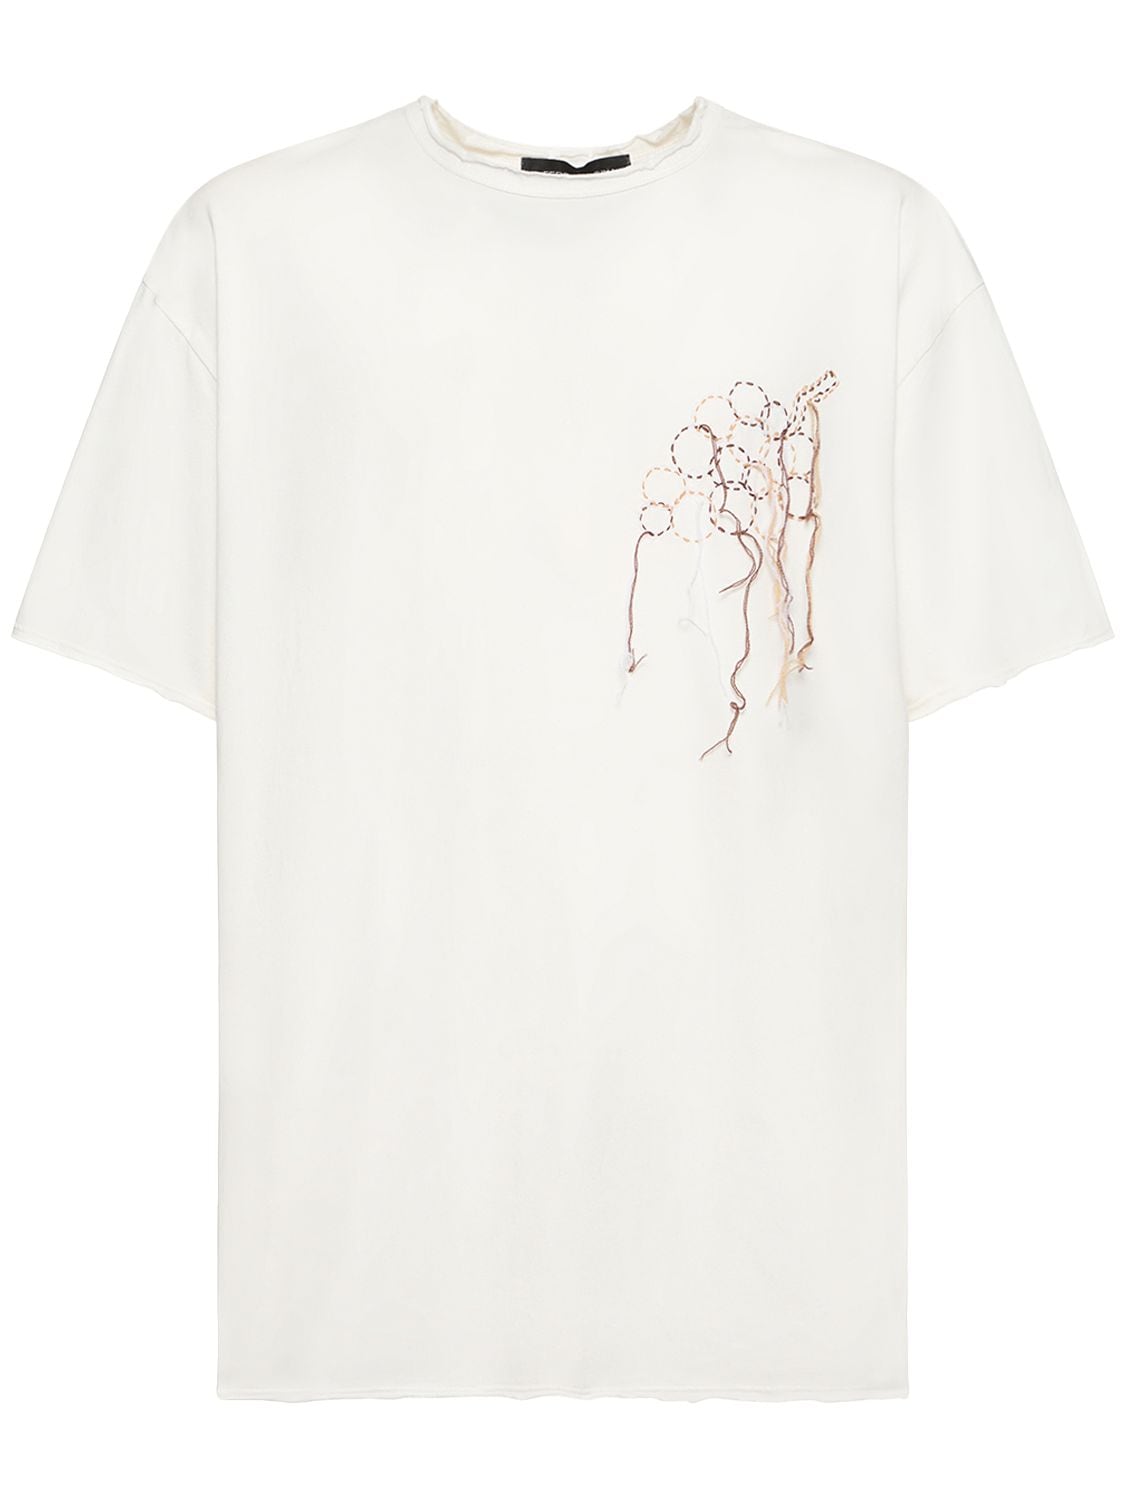 FEDERICO CINA Embroidered Grape T-shirt